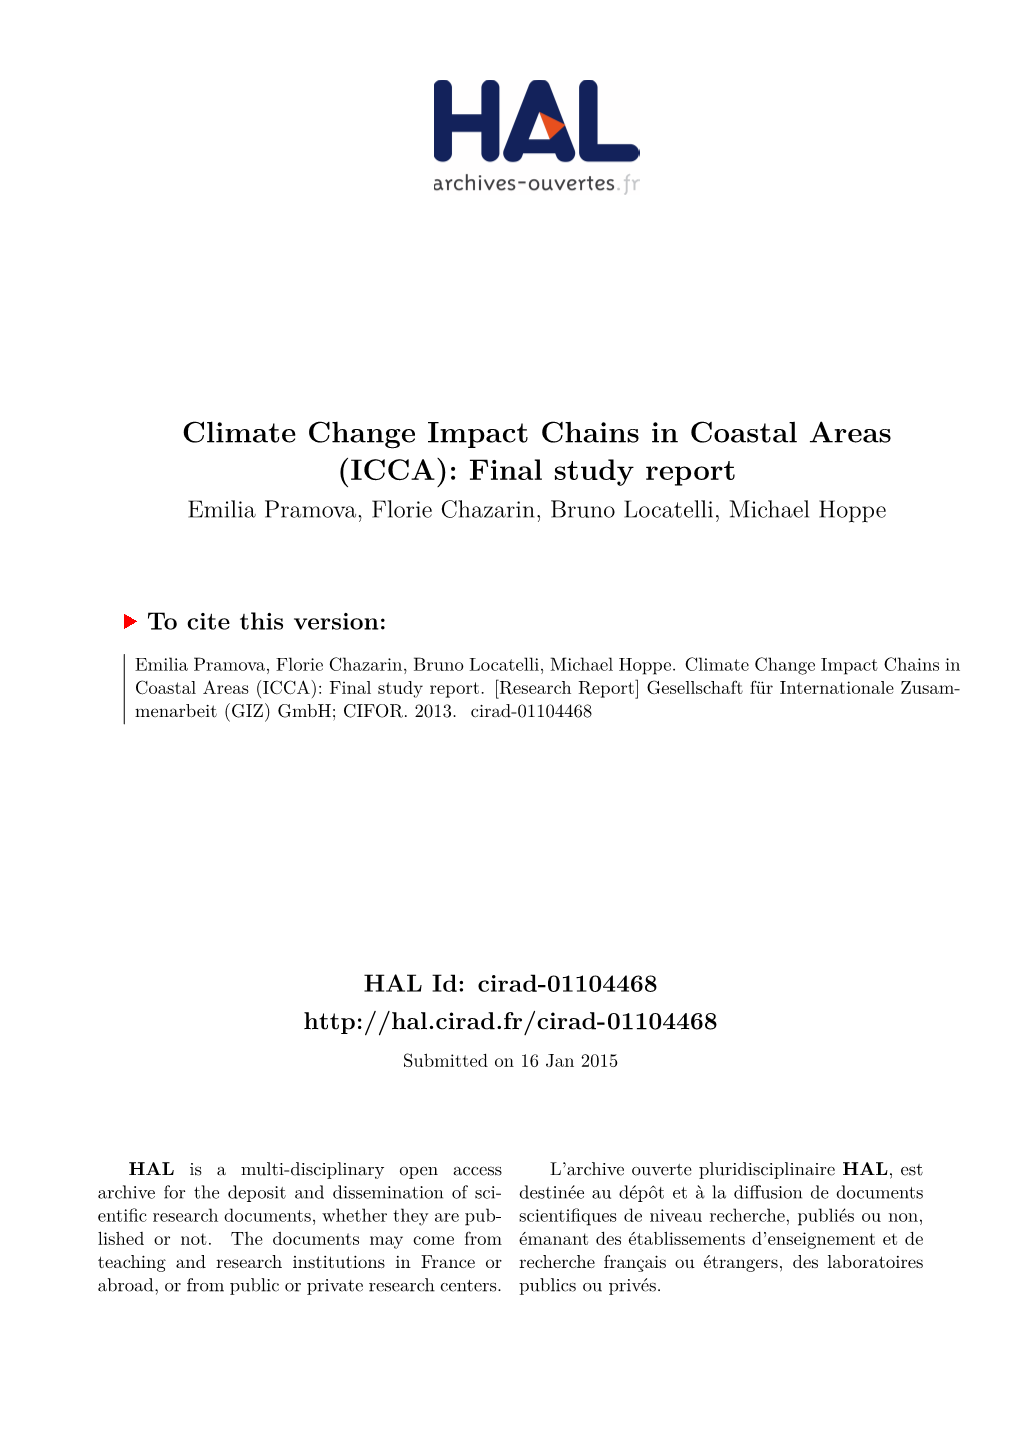 Climate Change Impact Chains in Coastal Areas (ICCA): Final Study Report Emilia Pramova, Florie Chazarin, Bruno Locatelli, Michael Hoppe